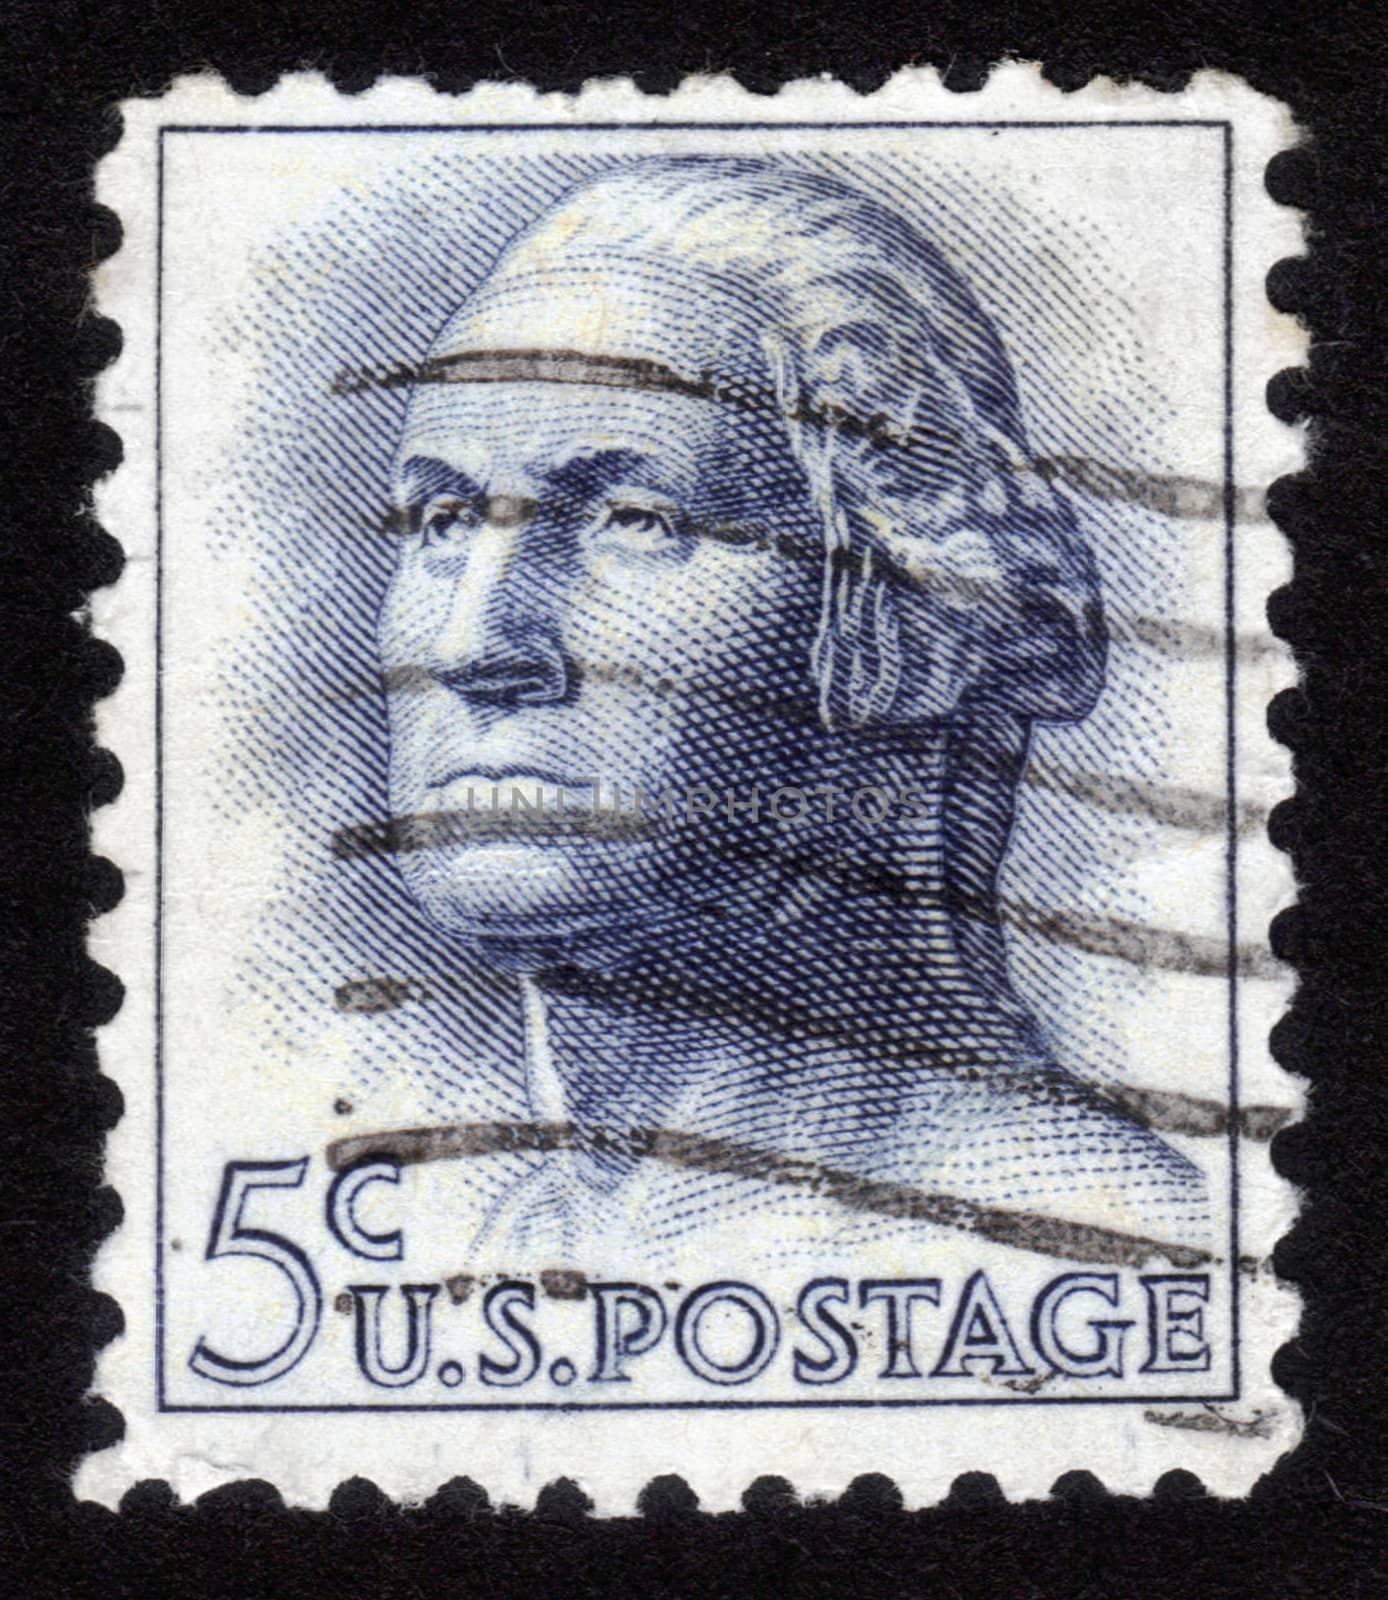 USA - CIRCA 1962: A stamp printed in USA shows image portrait George Washington (1732-1799), the first president of USA, circa 1962